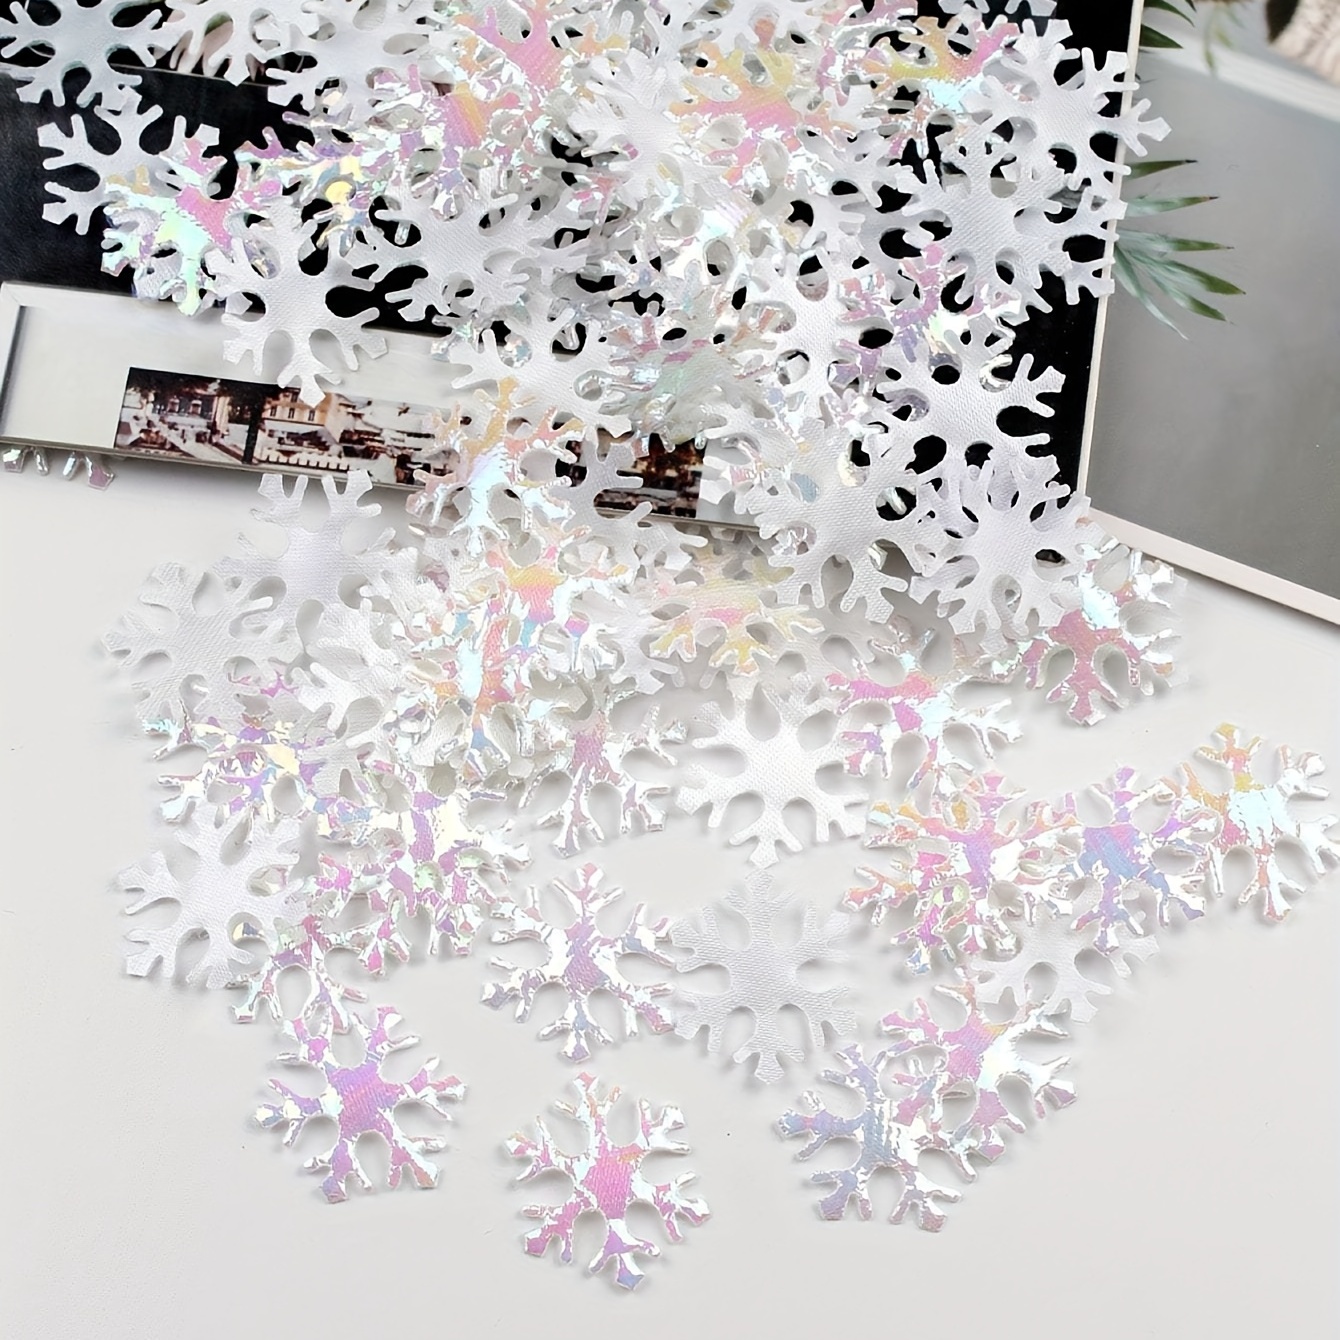 Christmas Snowflake Confetti Decoration(300pcs)konsait Large Shimmer Snowflakes Cake Table Confetti for Xmas Party Decor Accessories Winter Wedding HA